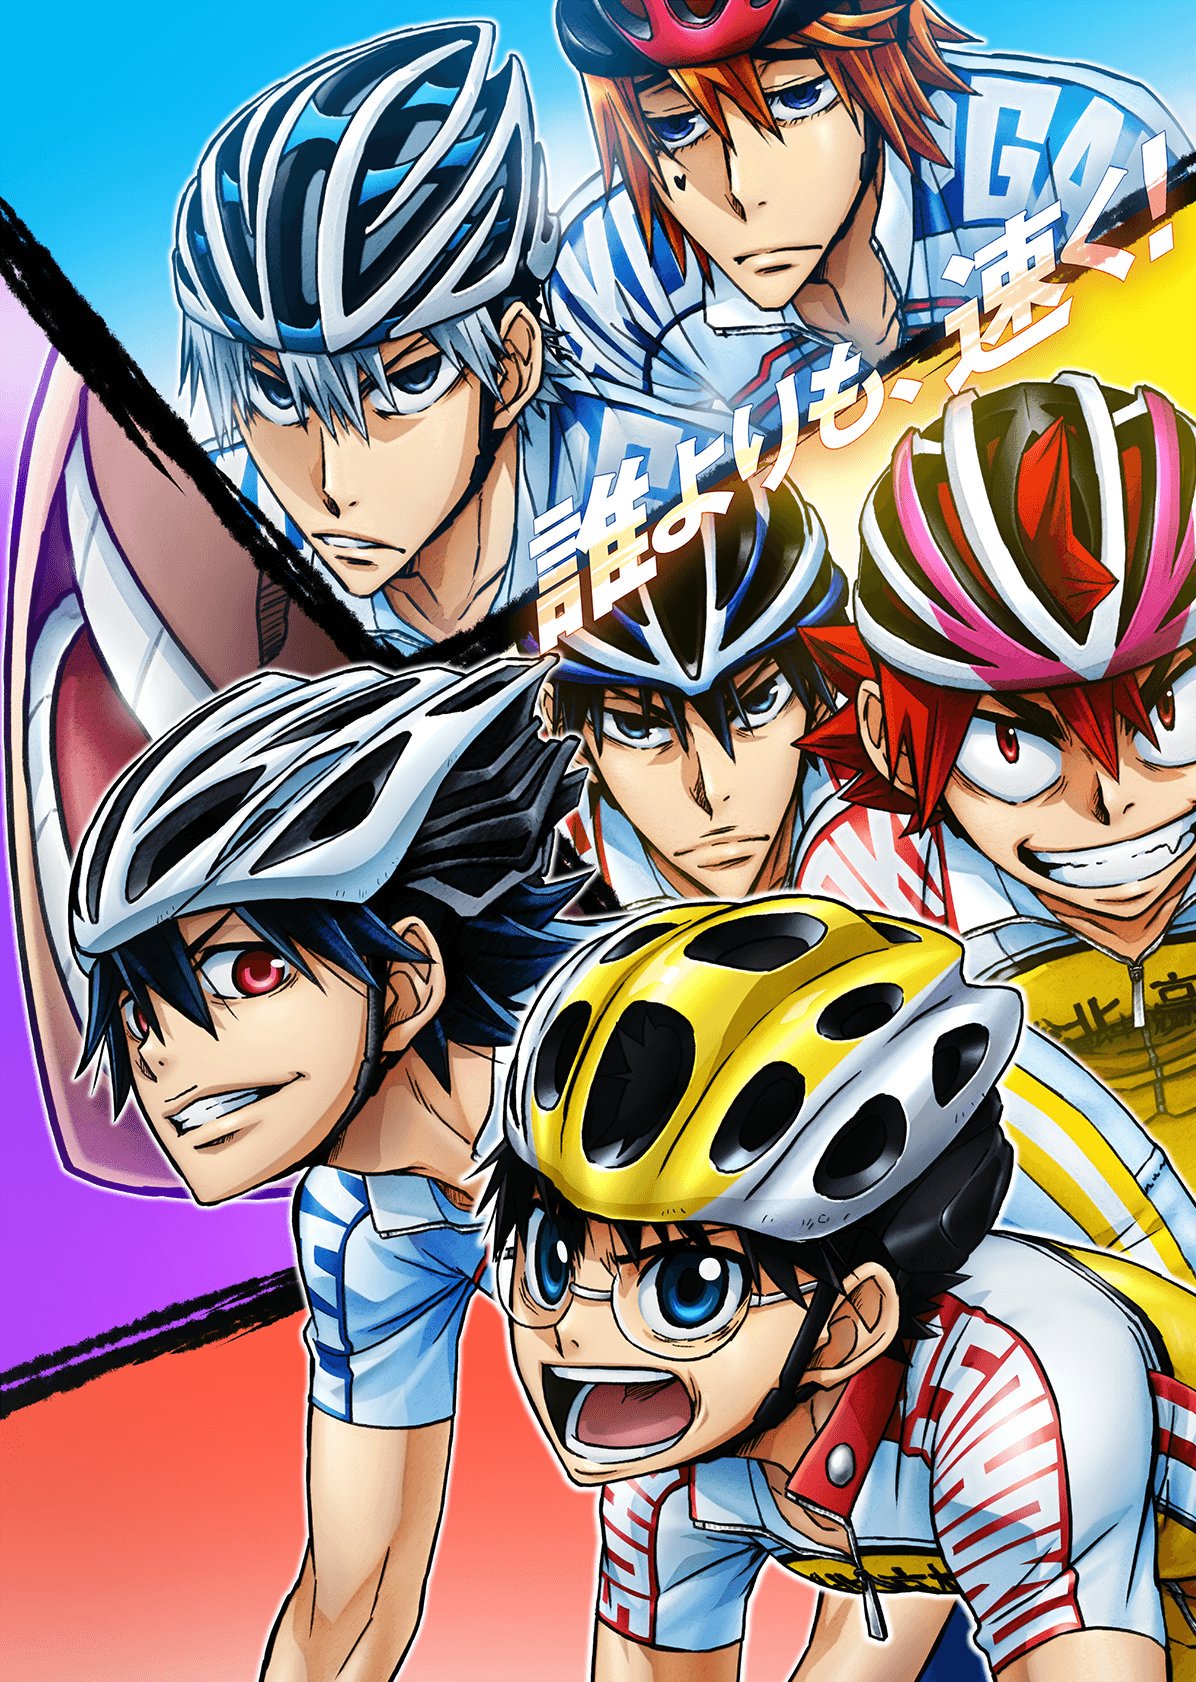 Yowamushi Pedal Glory Line الحلقة 12 مترجمة الموسم الرابع اون لاين Shahiid Anime